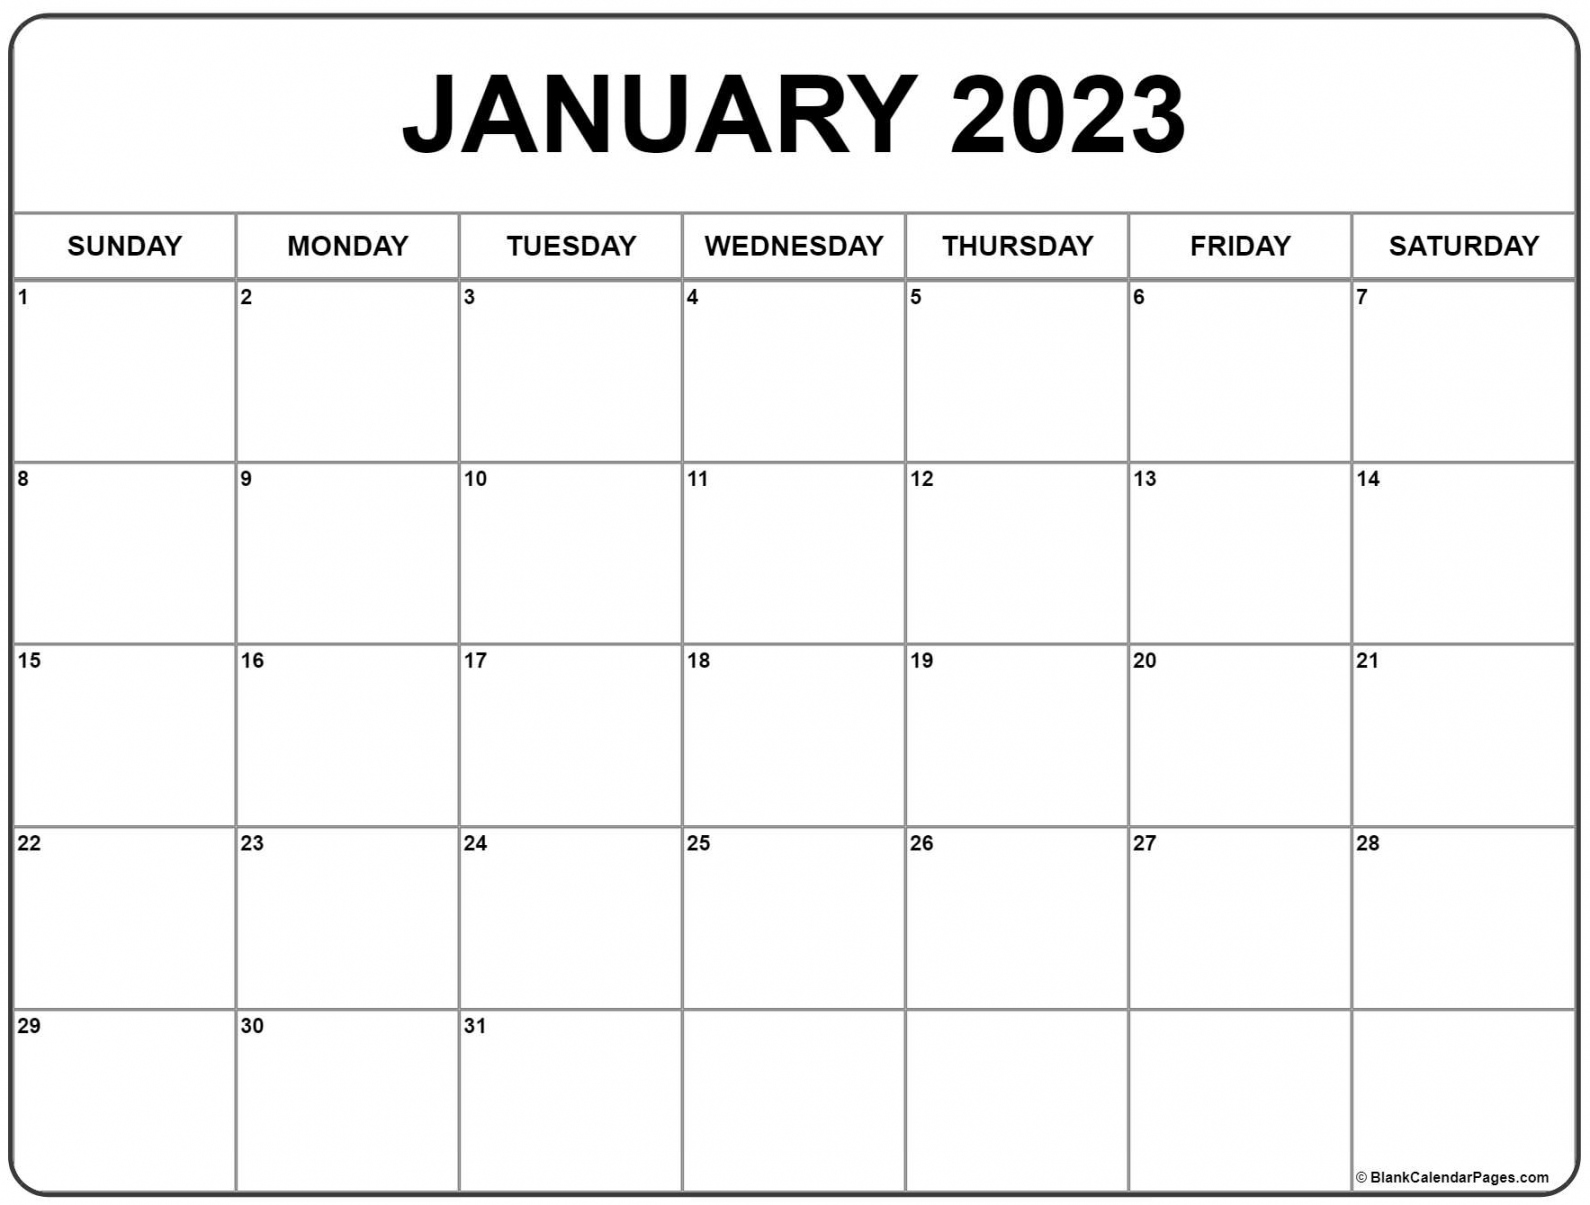 January  calendar  free printable calendar - FREE Printables - January 2023 Calendar Printable Free